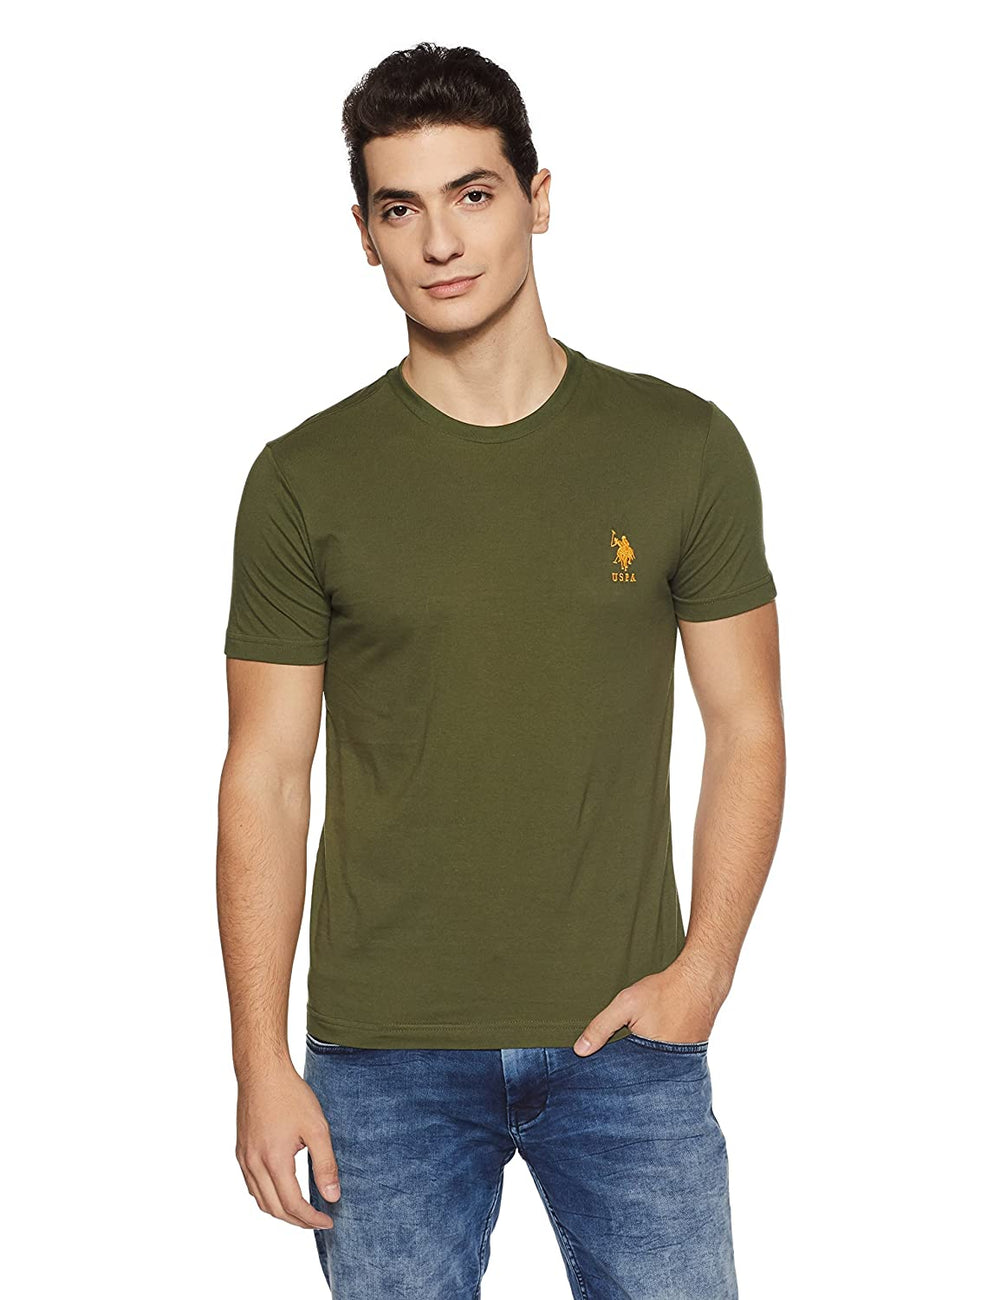 U.S. Polo Assn. Cotton Casual Green T-shirt For Men